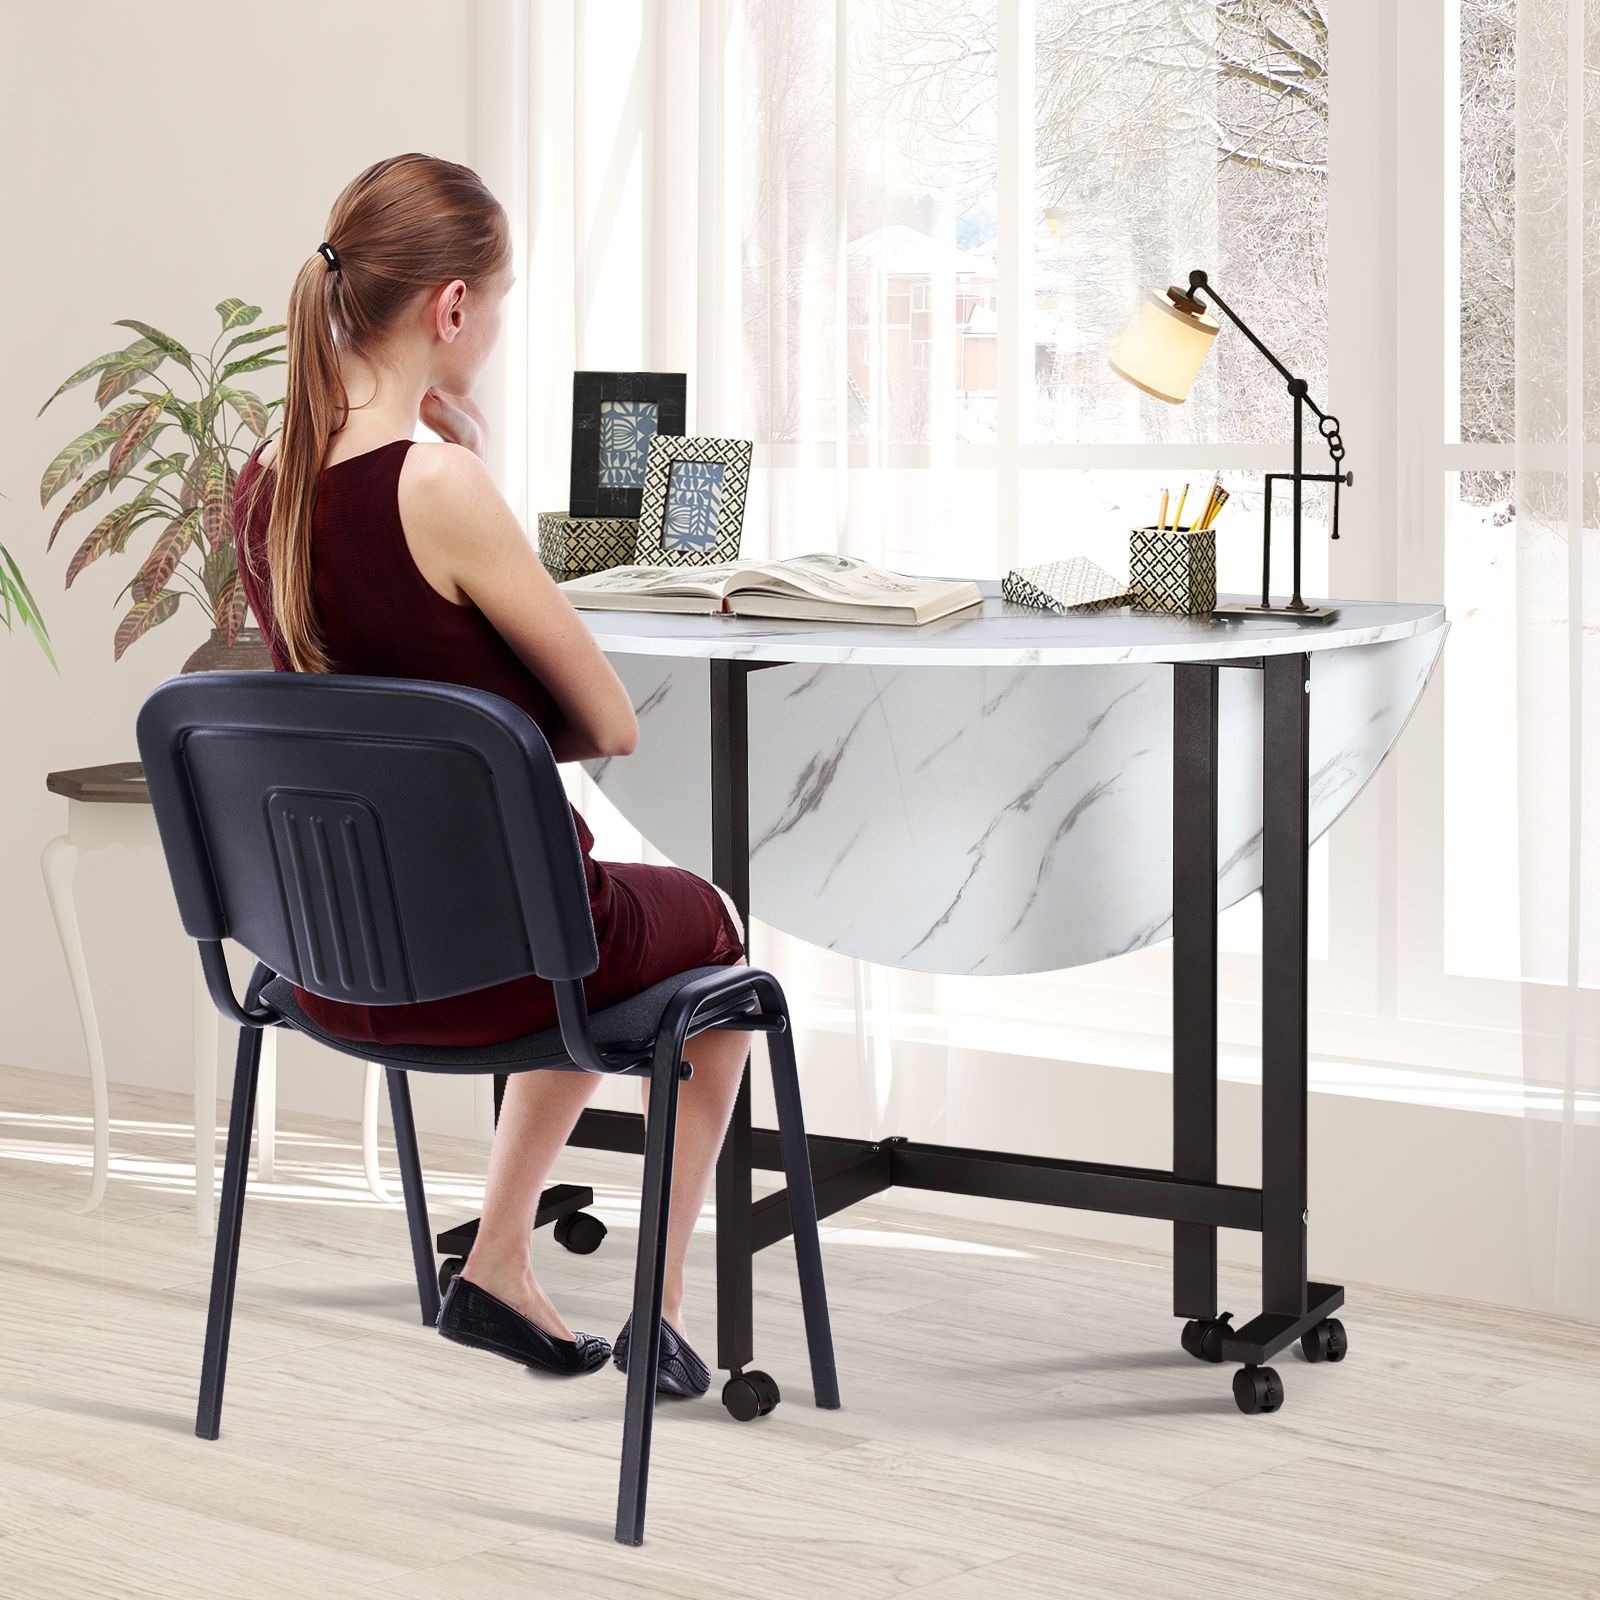 Marble Dining Table Foldable Wood Drop Leaf Multifunctional Desk Wheels Metal Legs White